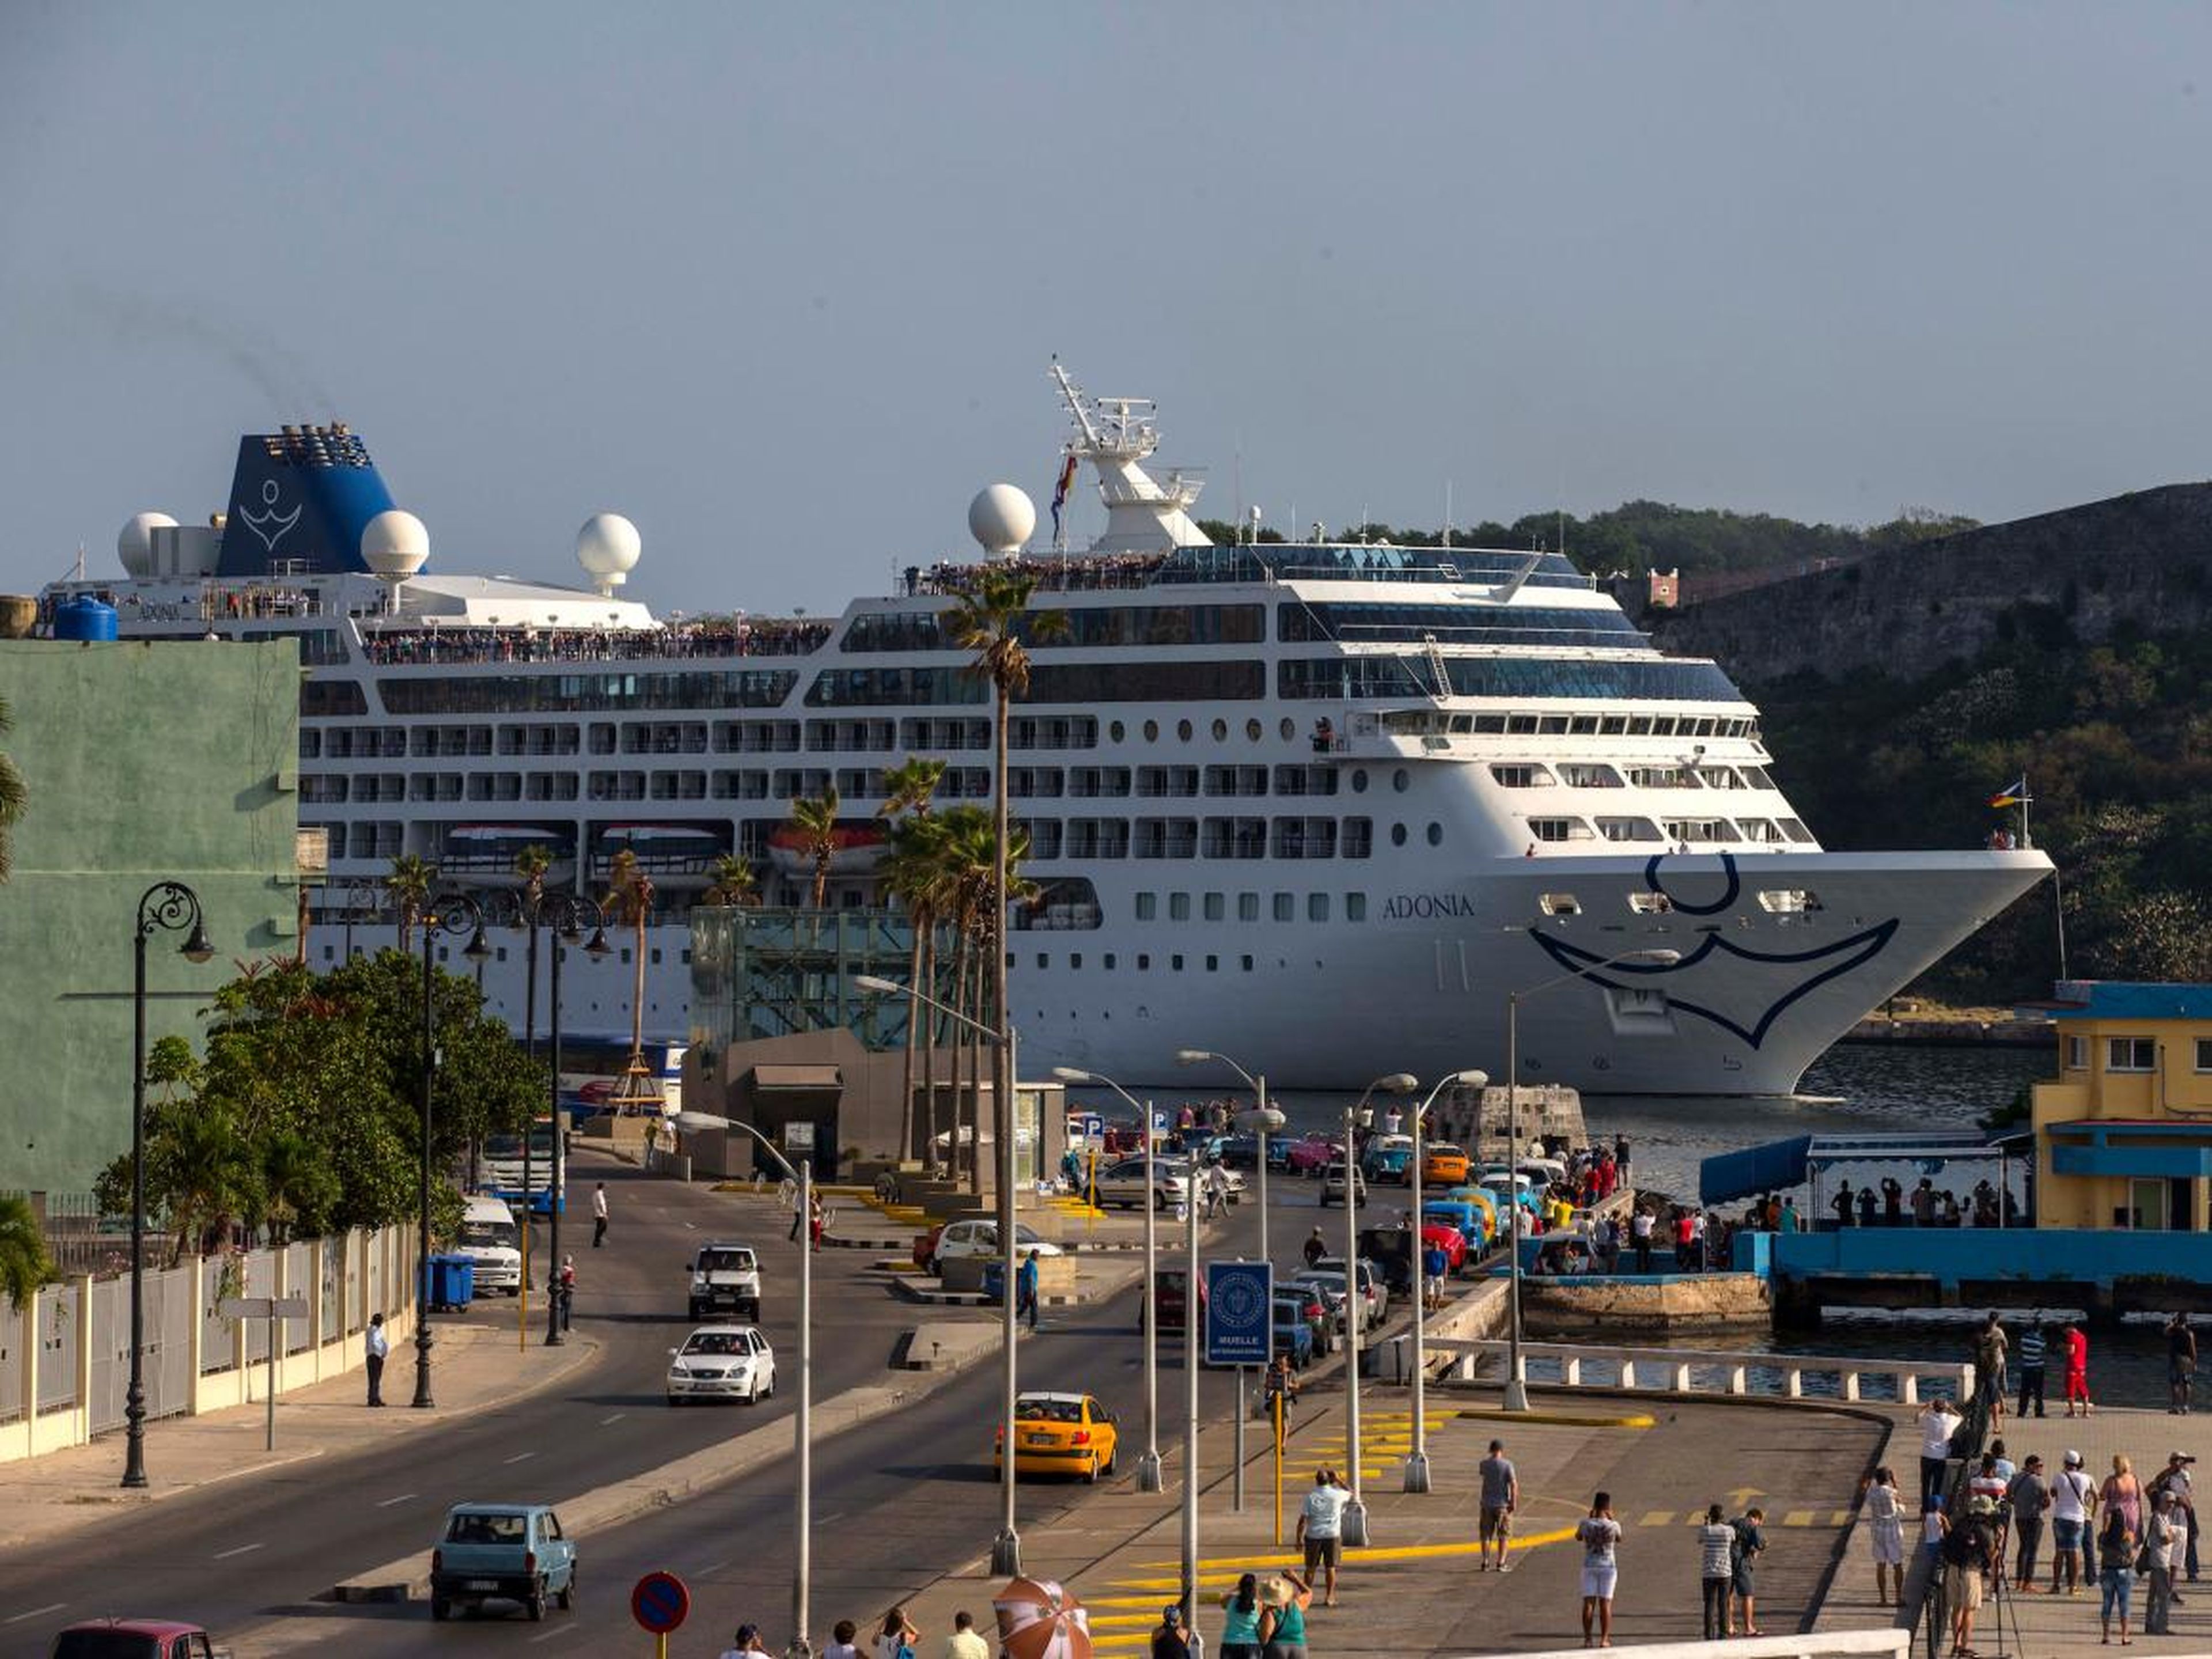 Carnival's Adonia cruise ship arrives from Miami in Havana in 2016.